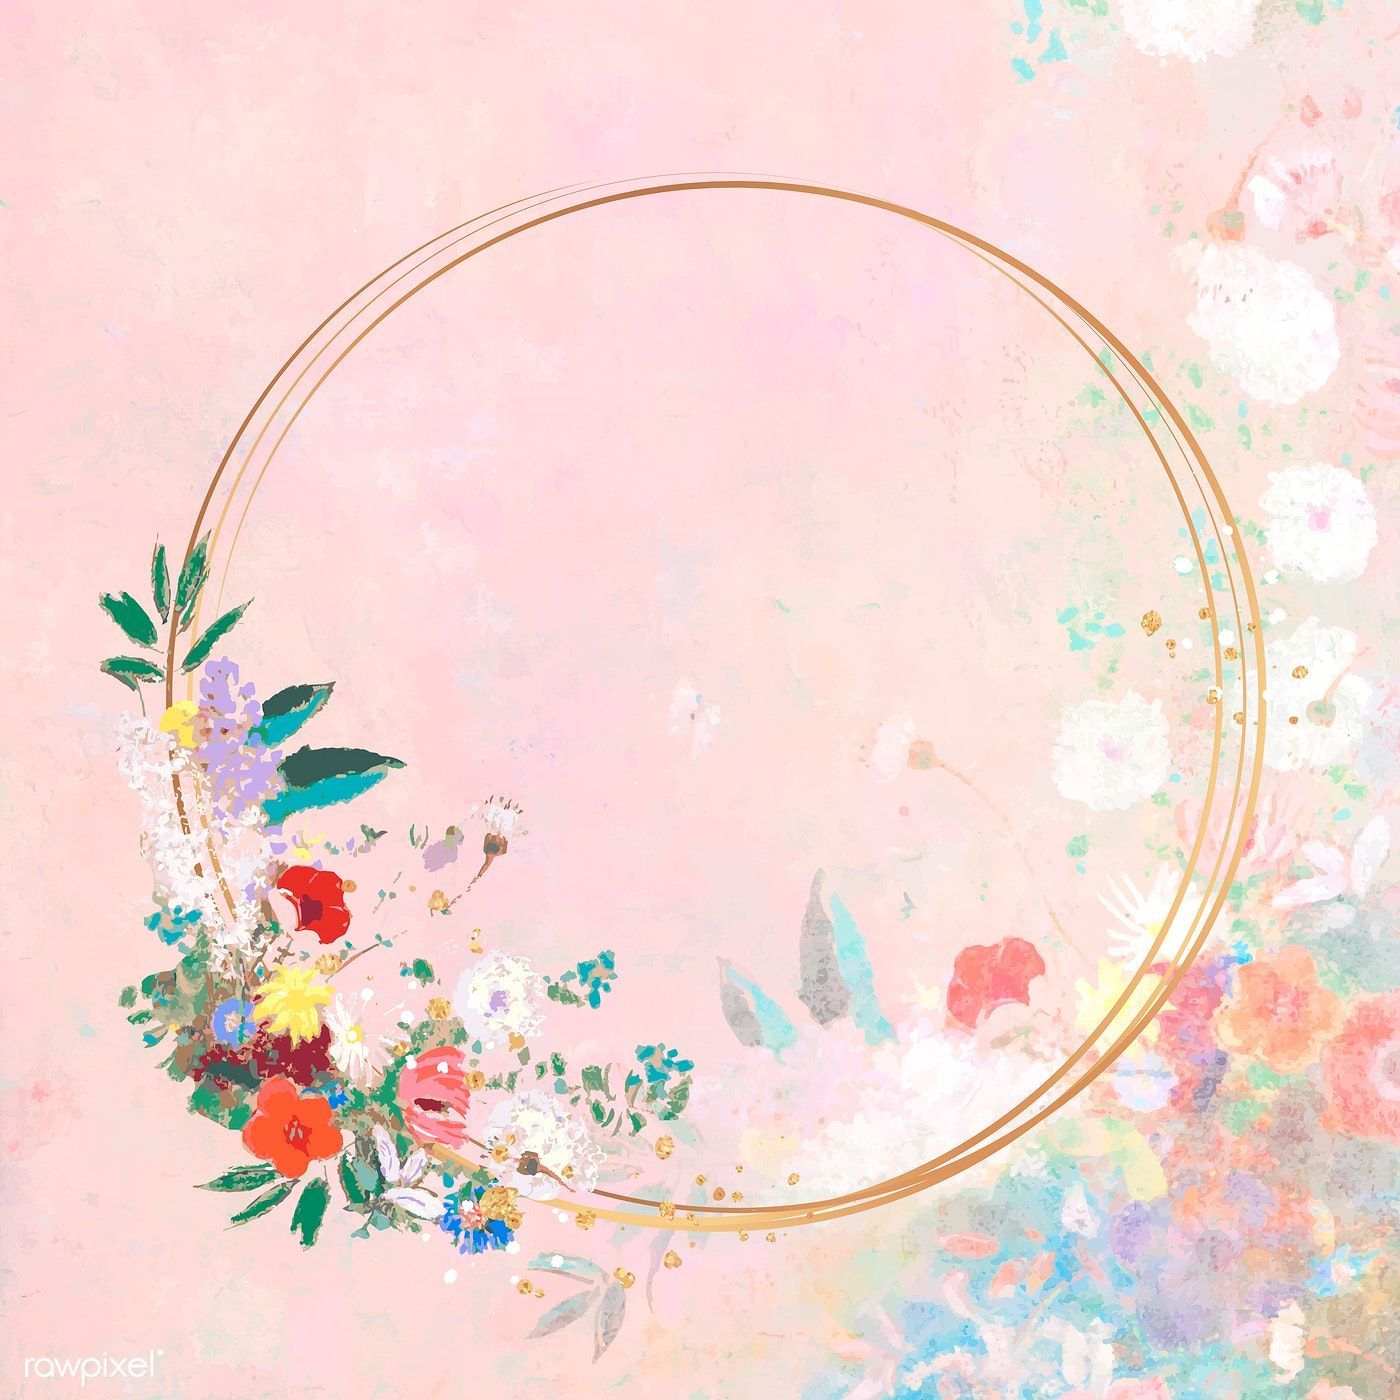 Download premium illustration of Round gold frame on pastel pink